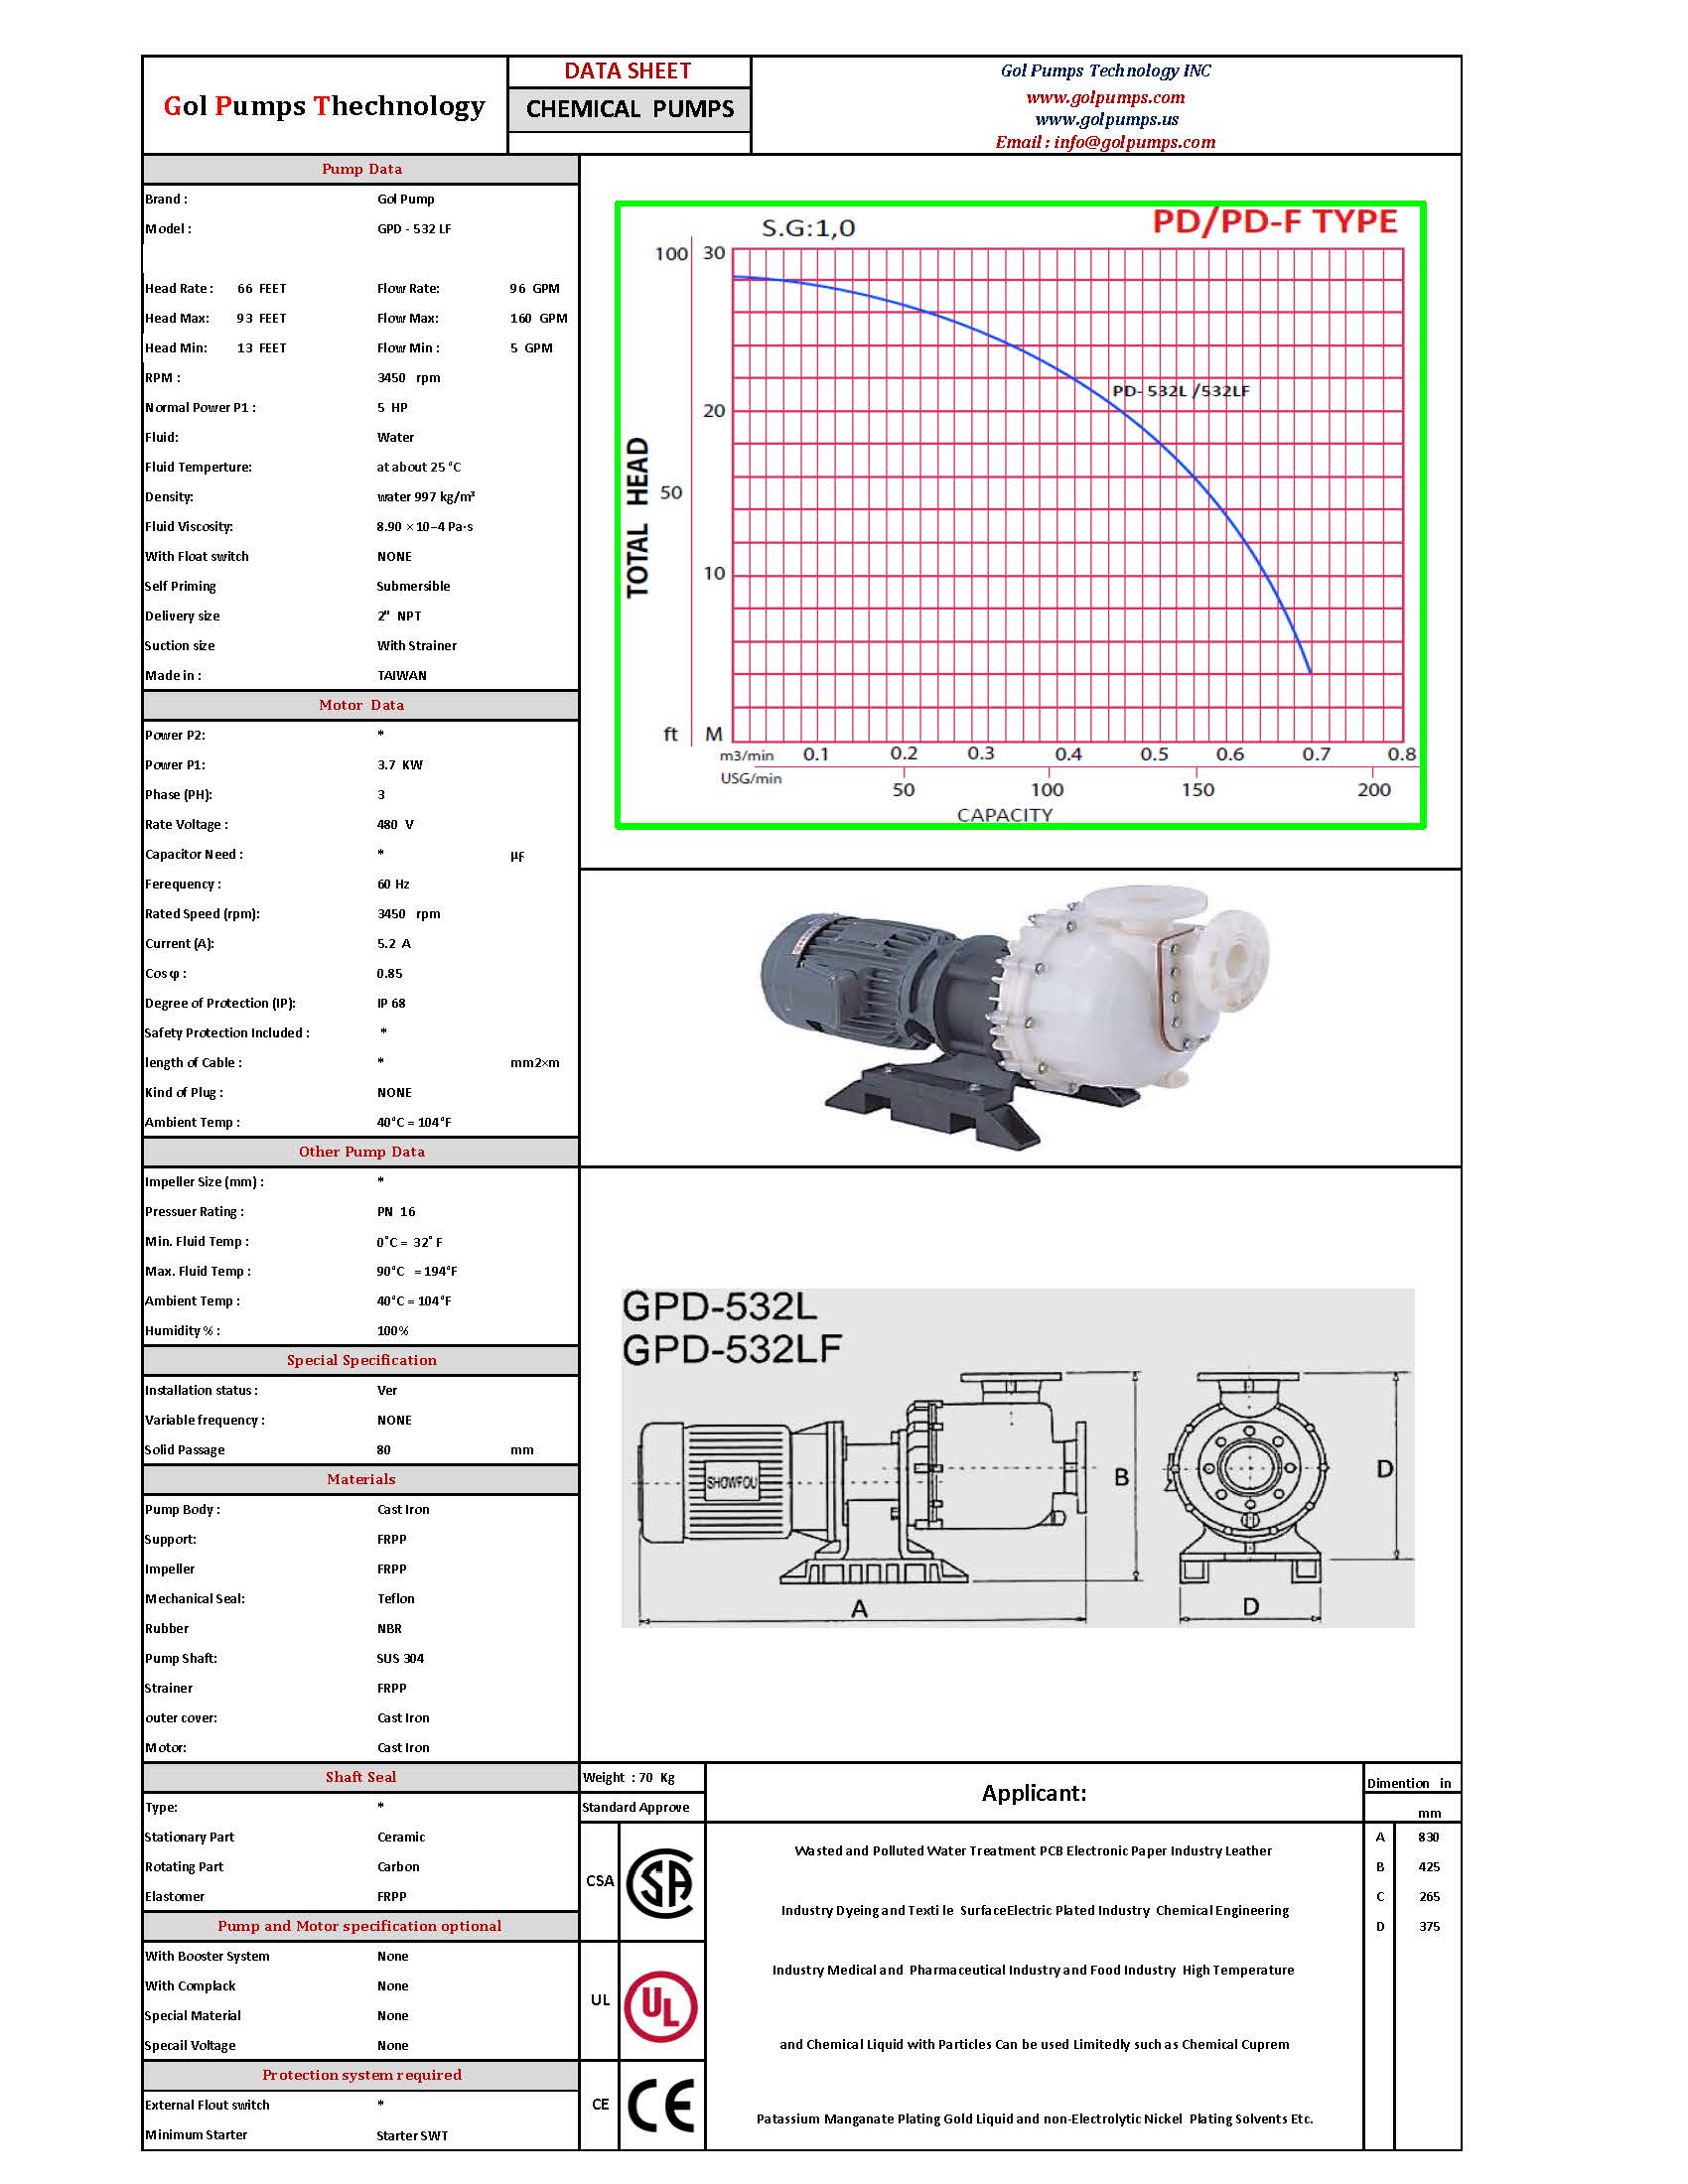 GPD-532LF Chemical Pump - Data Sheet